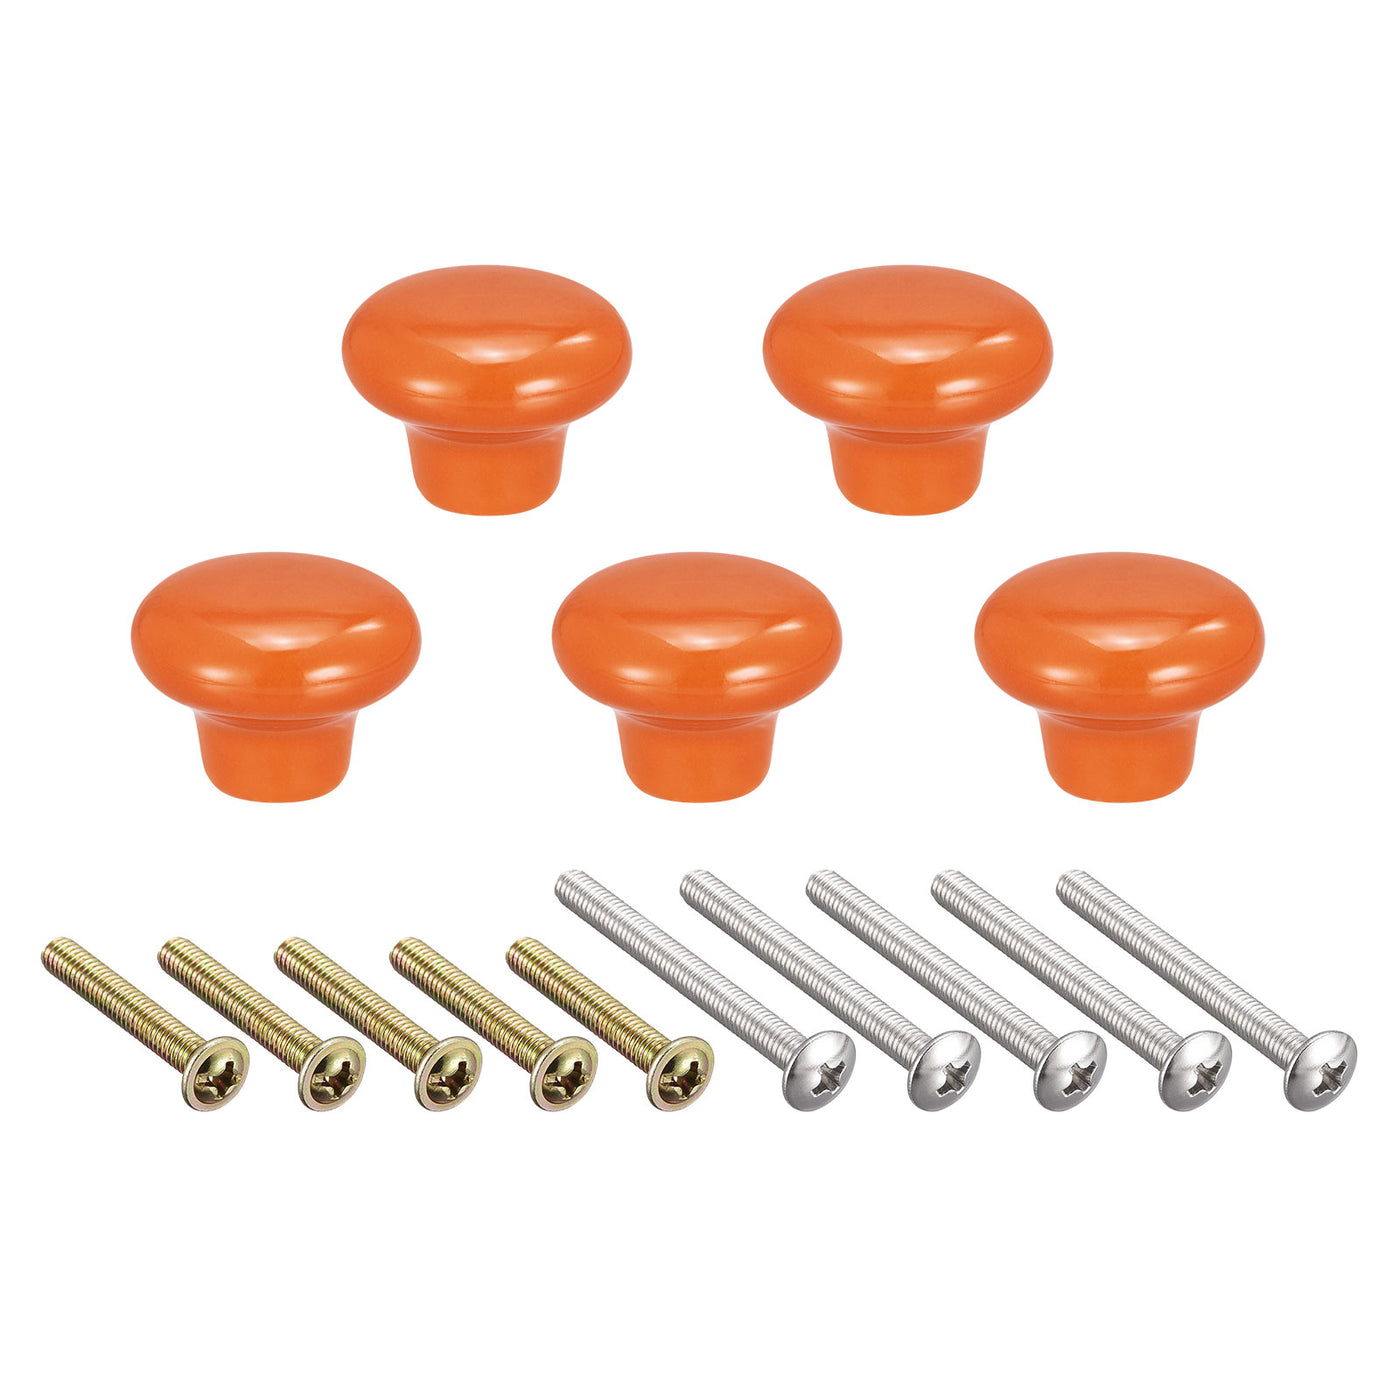 uxcell Uxcell 32x24mm Ceramic Drawer Knobs, 5pcs Mushroom Shape Door Pull Handles Orange